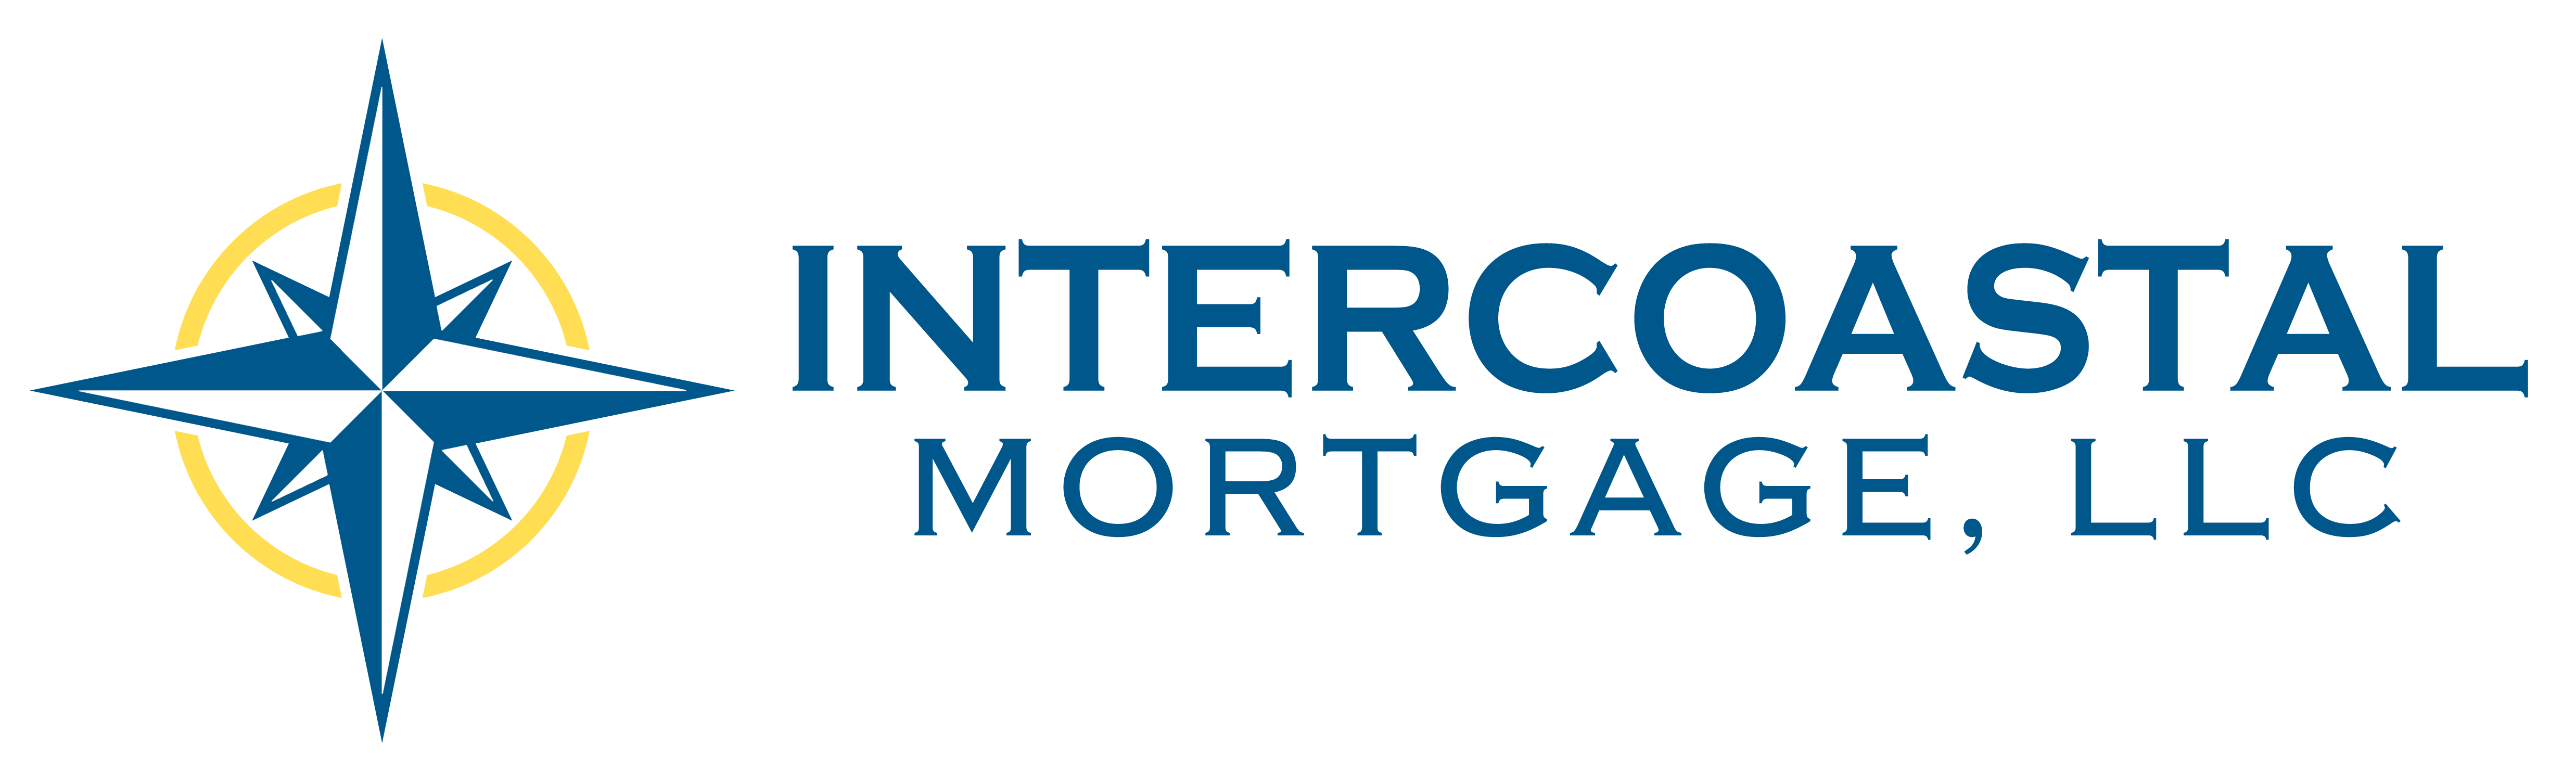 Intercoastal Mortgage LLC